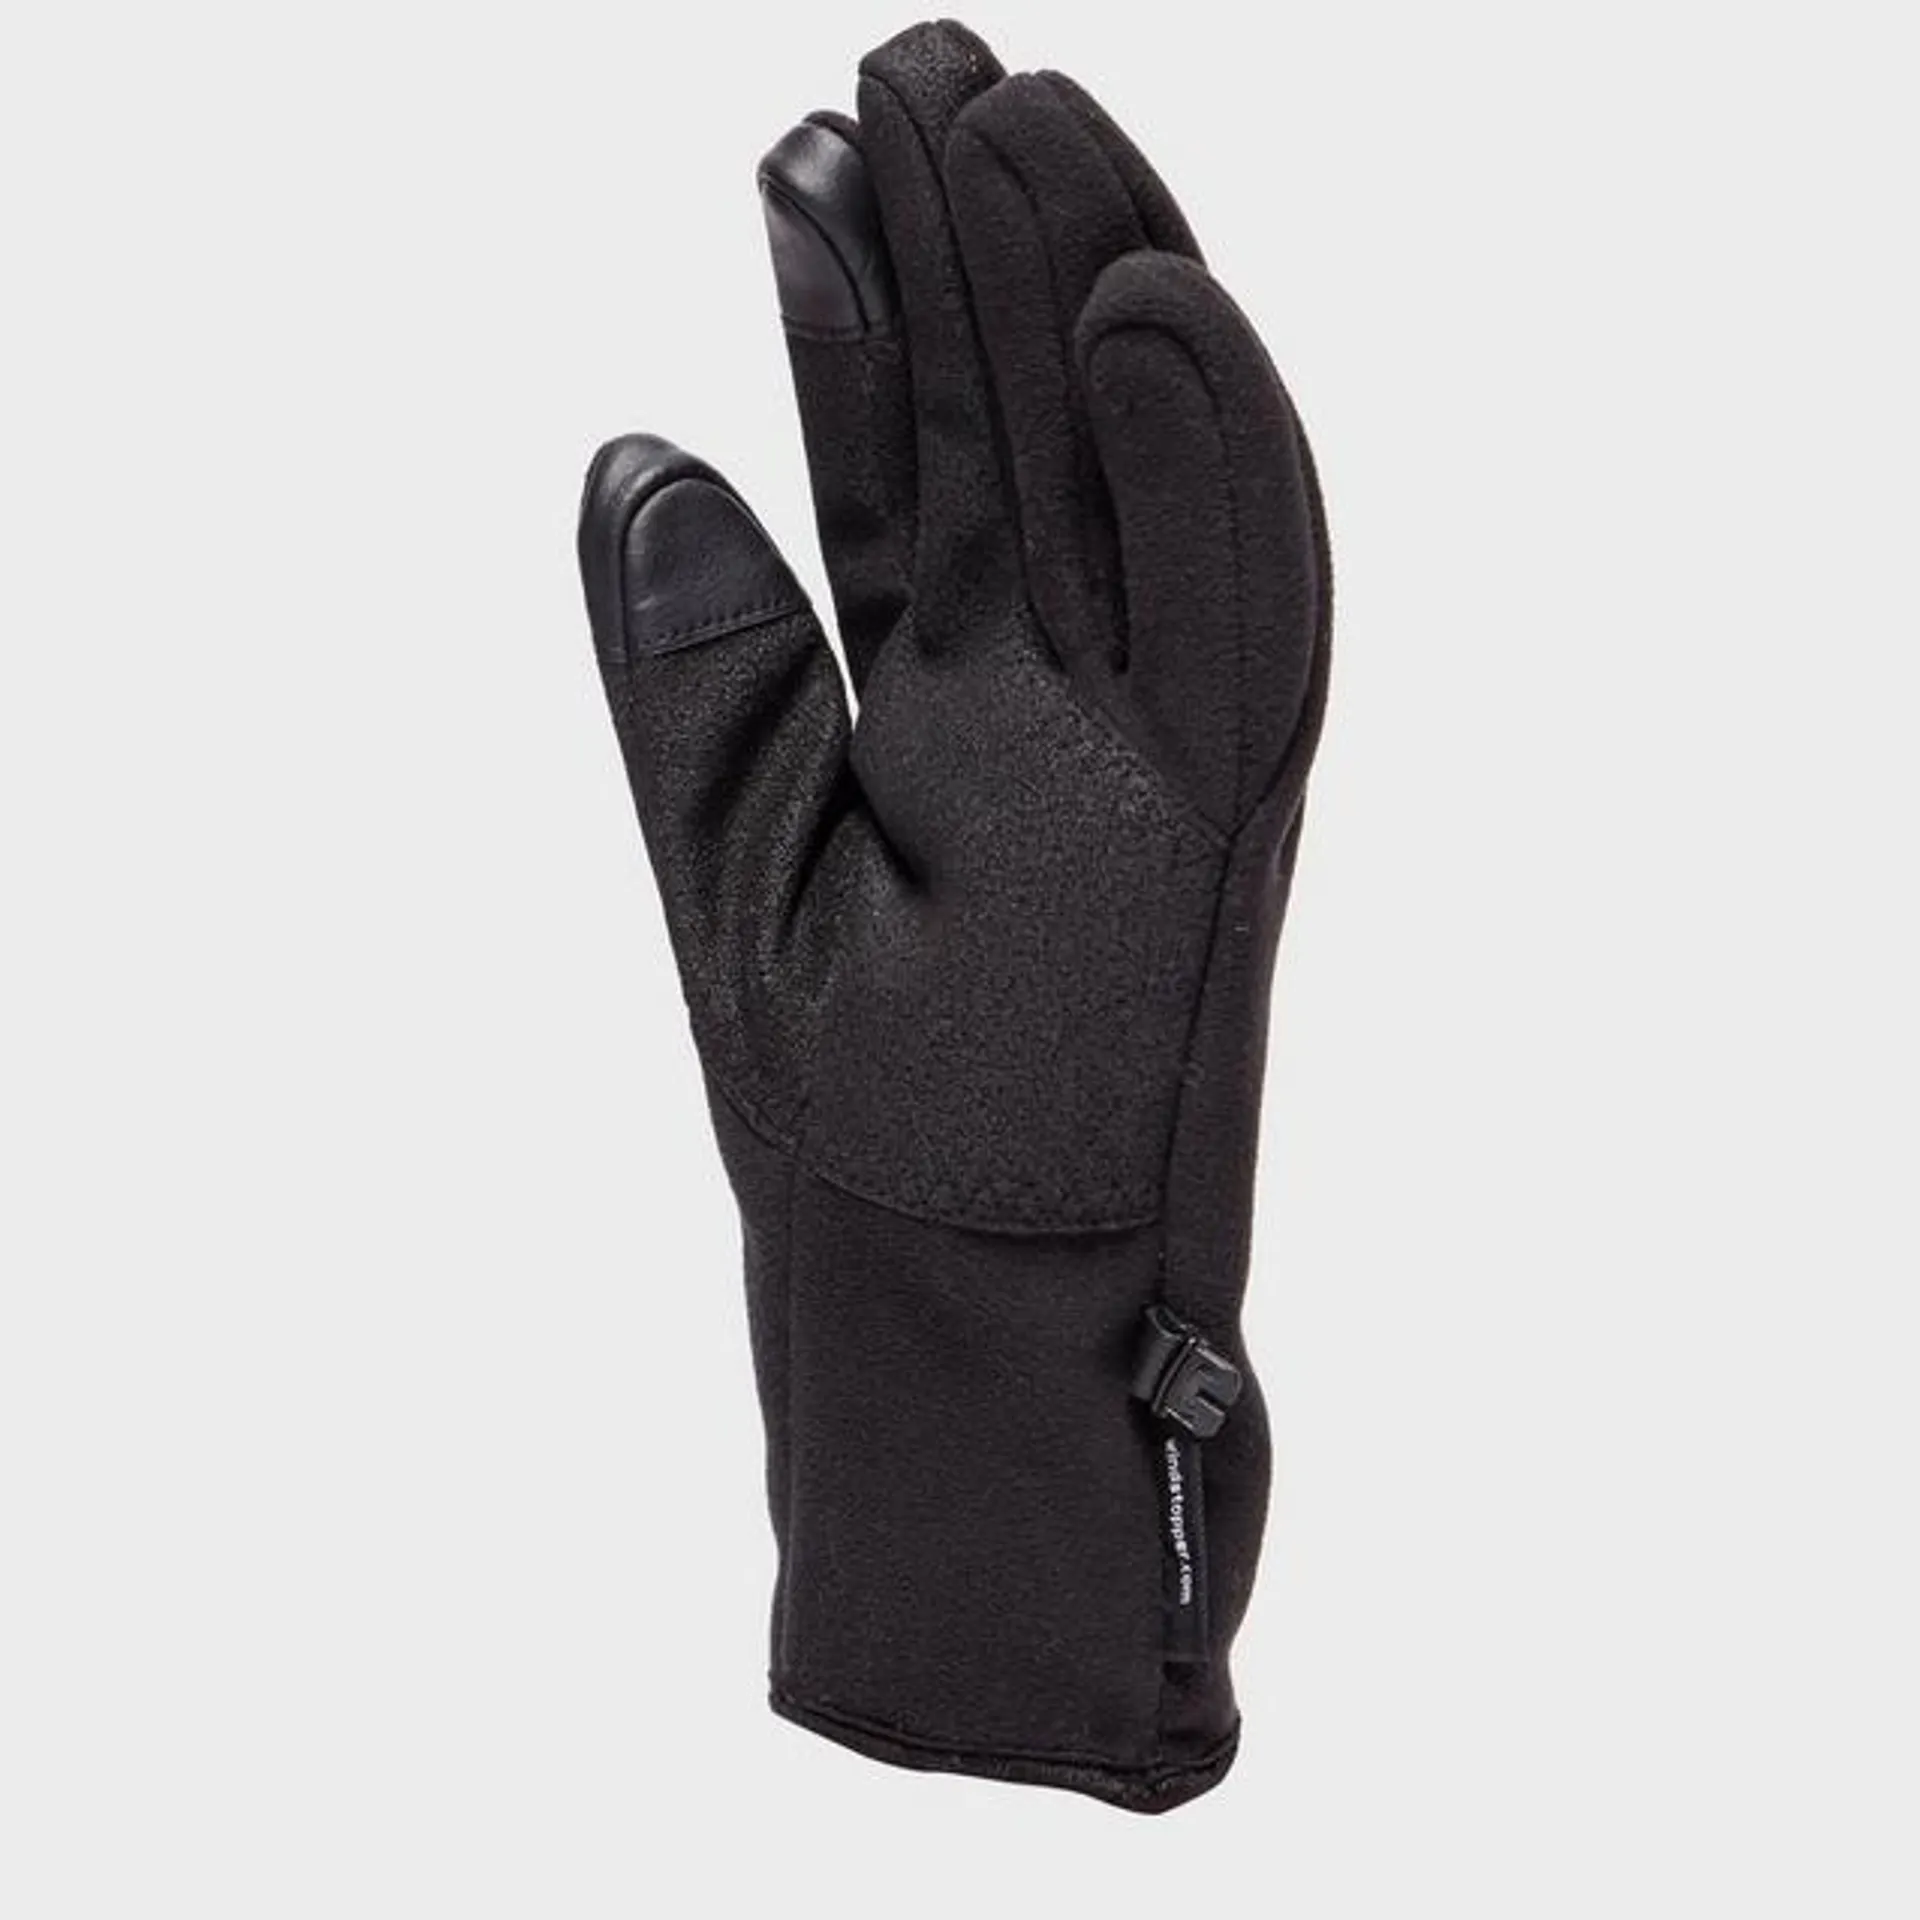 Men’s Gripper Sensor Glove